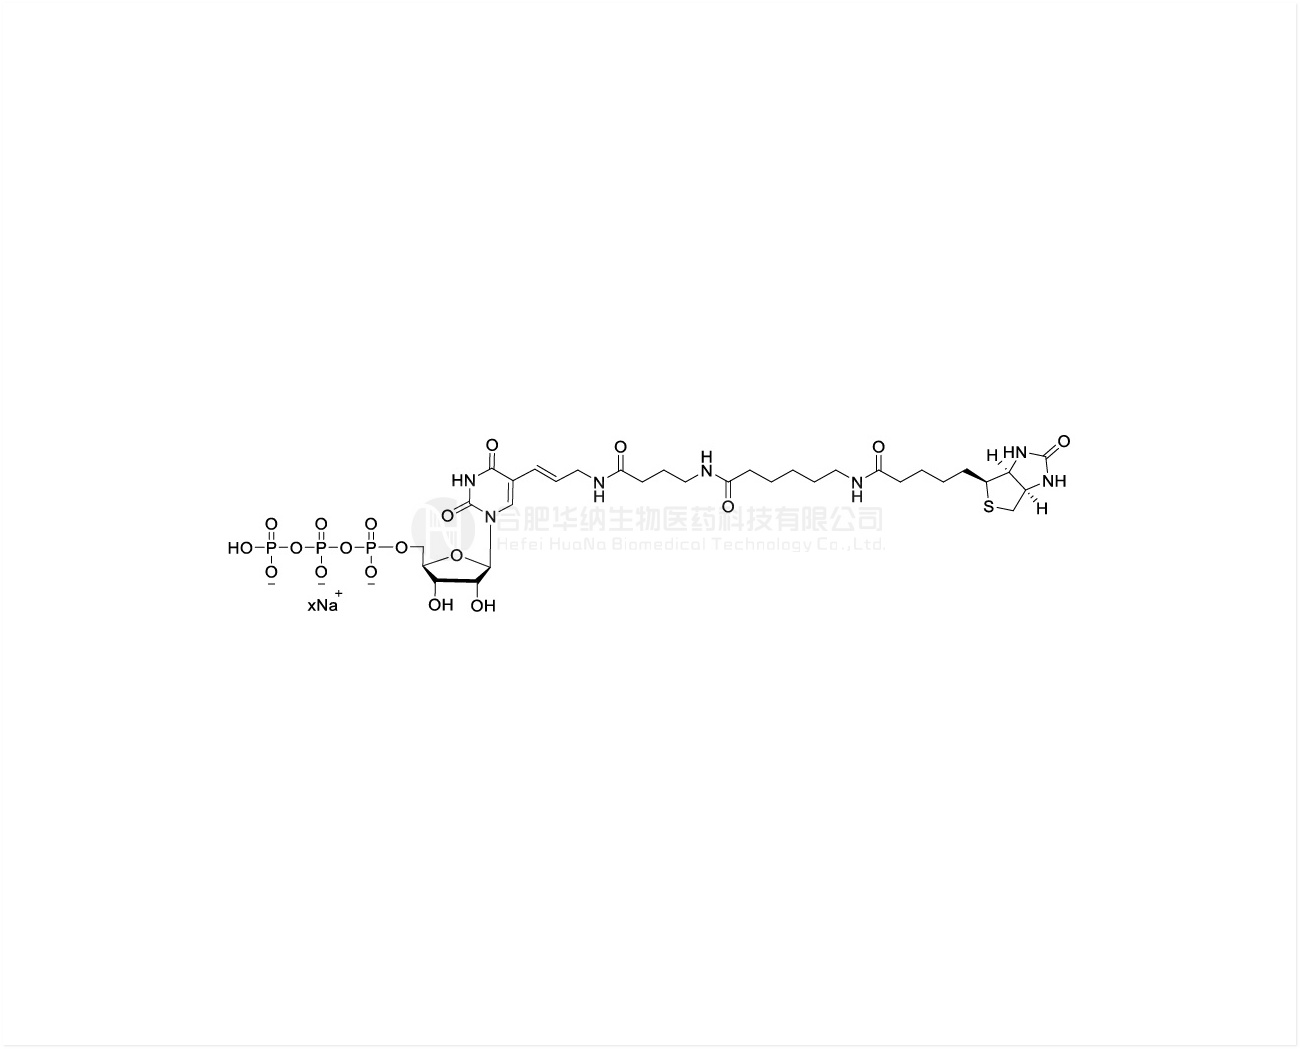 Biotin-16-UTP 10mM Sodium Solution